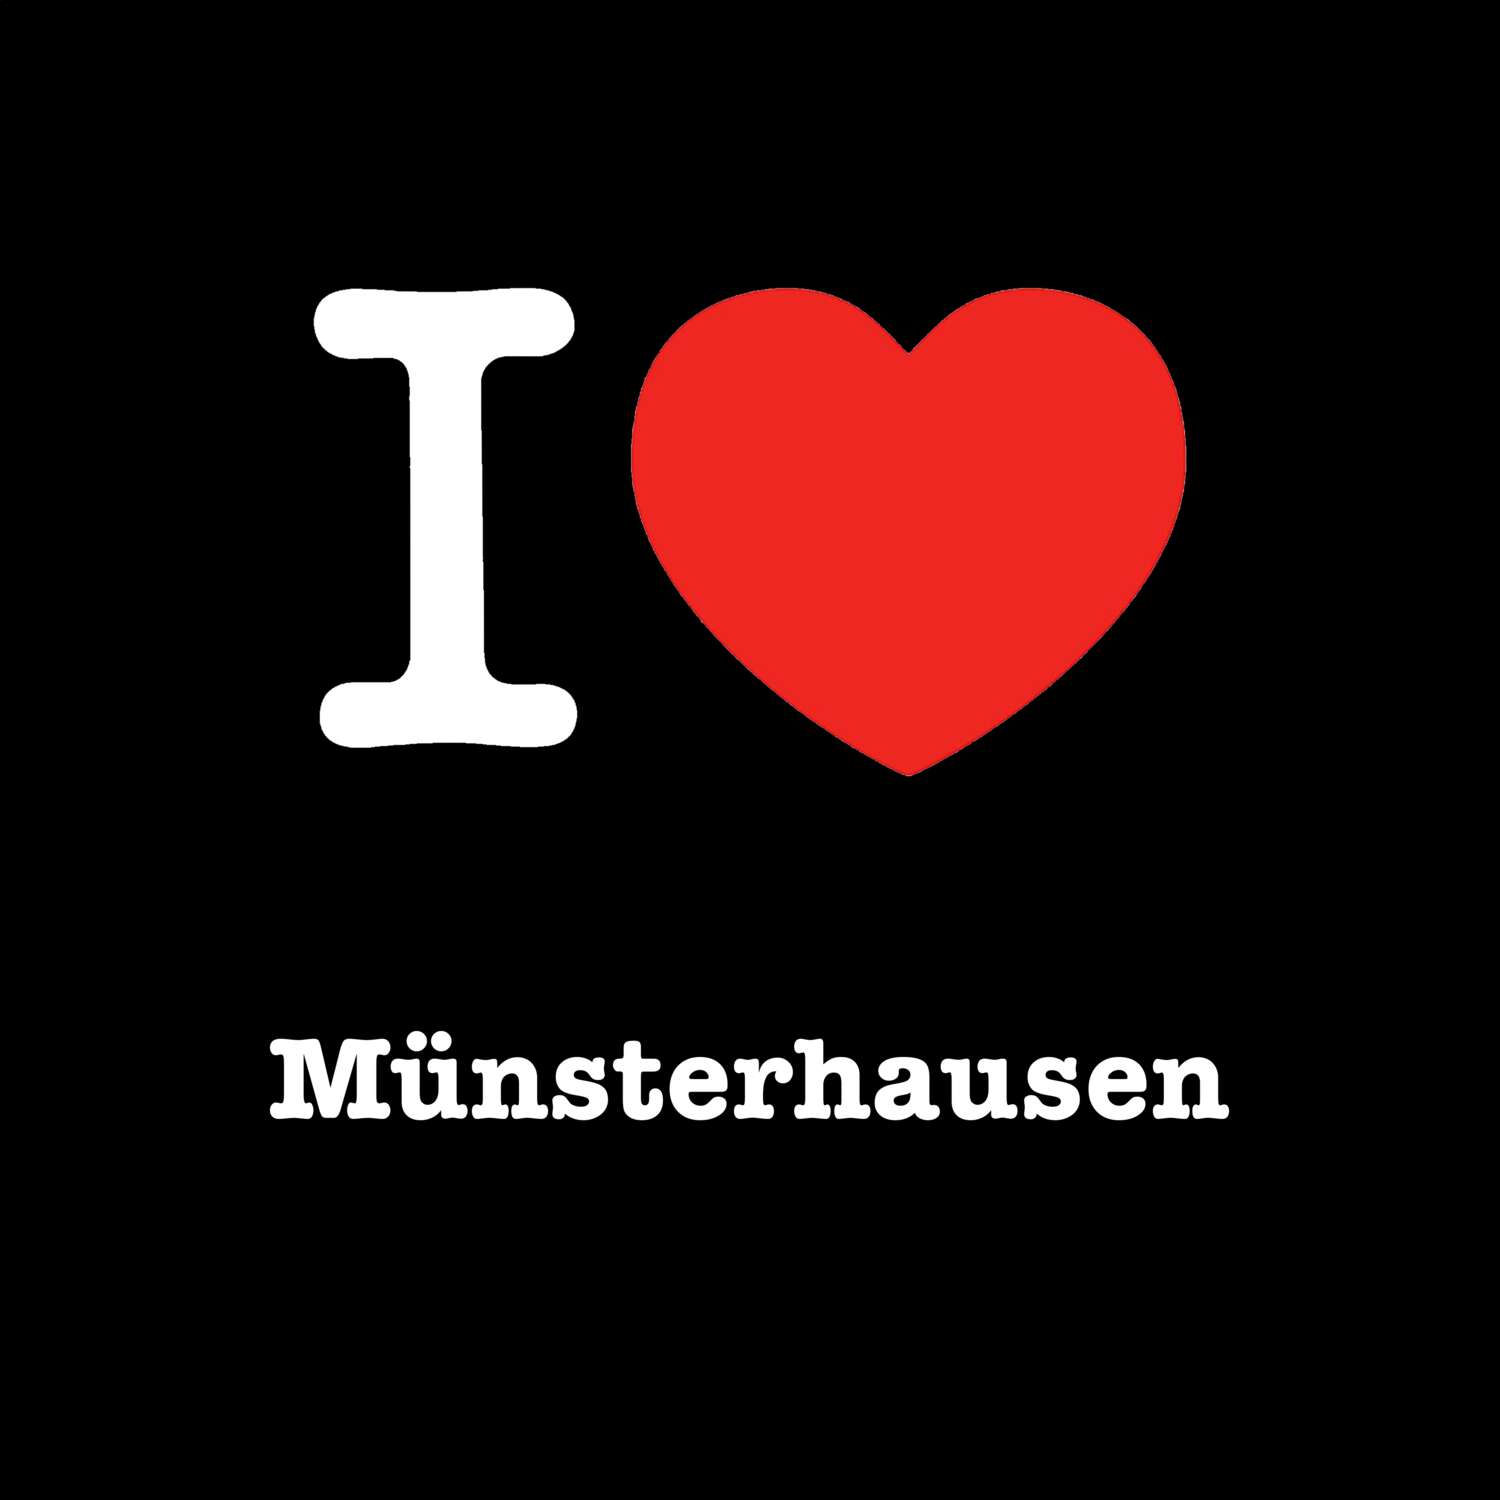 Münsterhausen T-Shirt »I love«